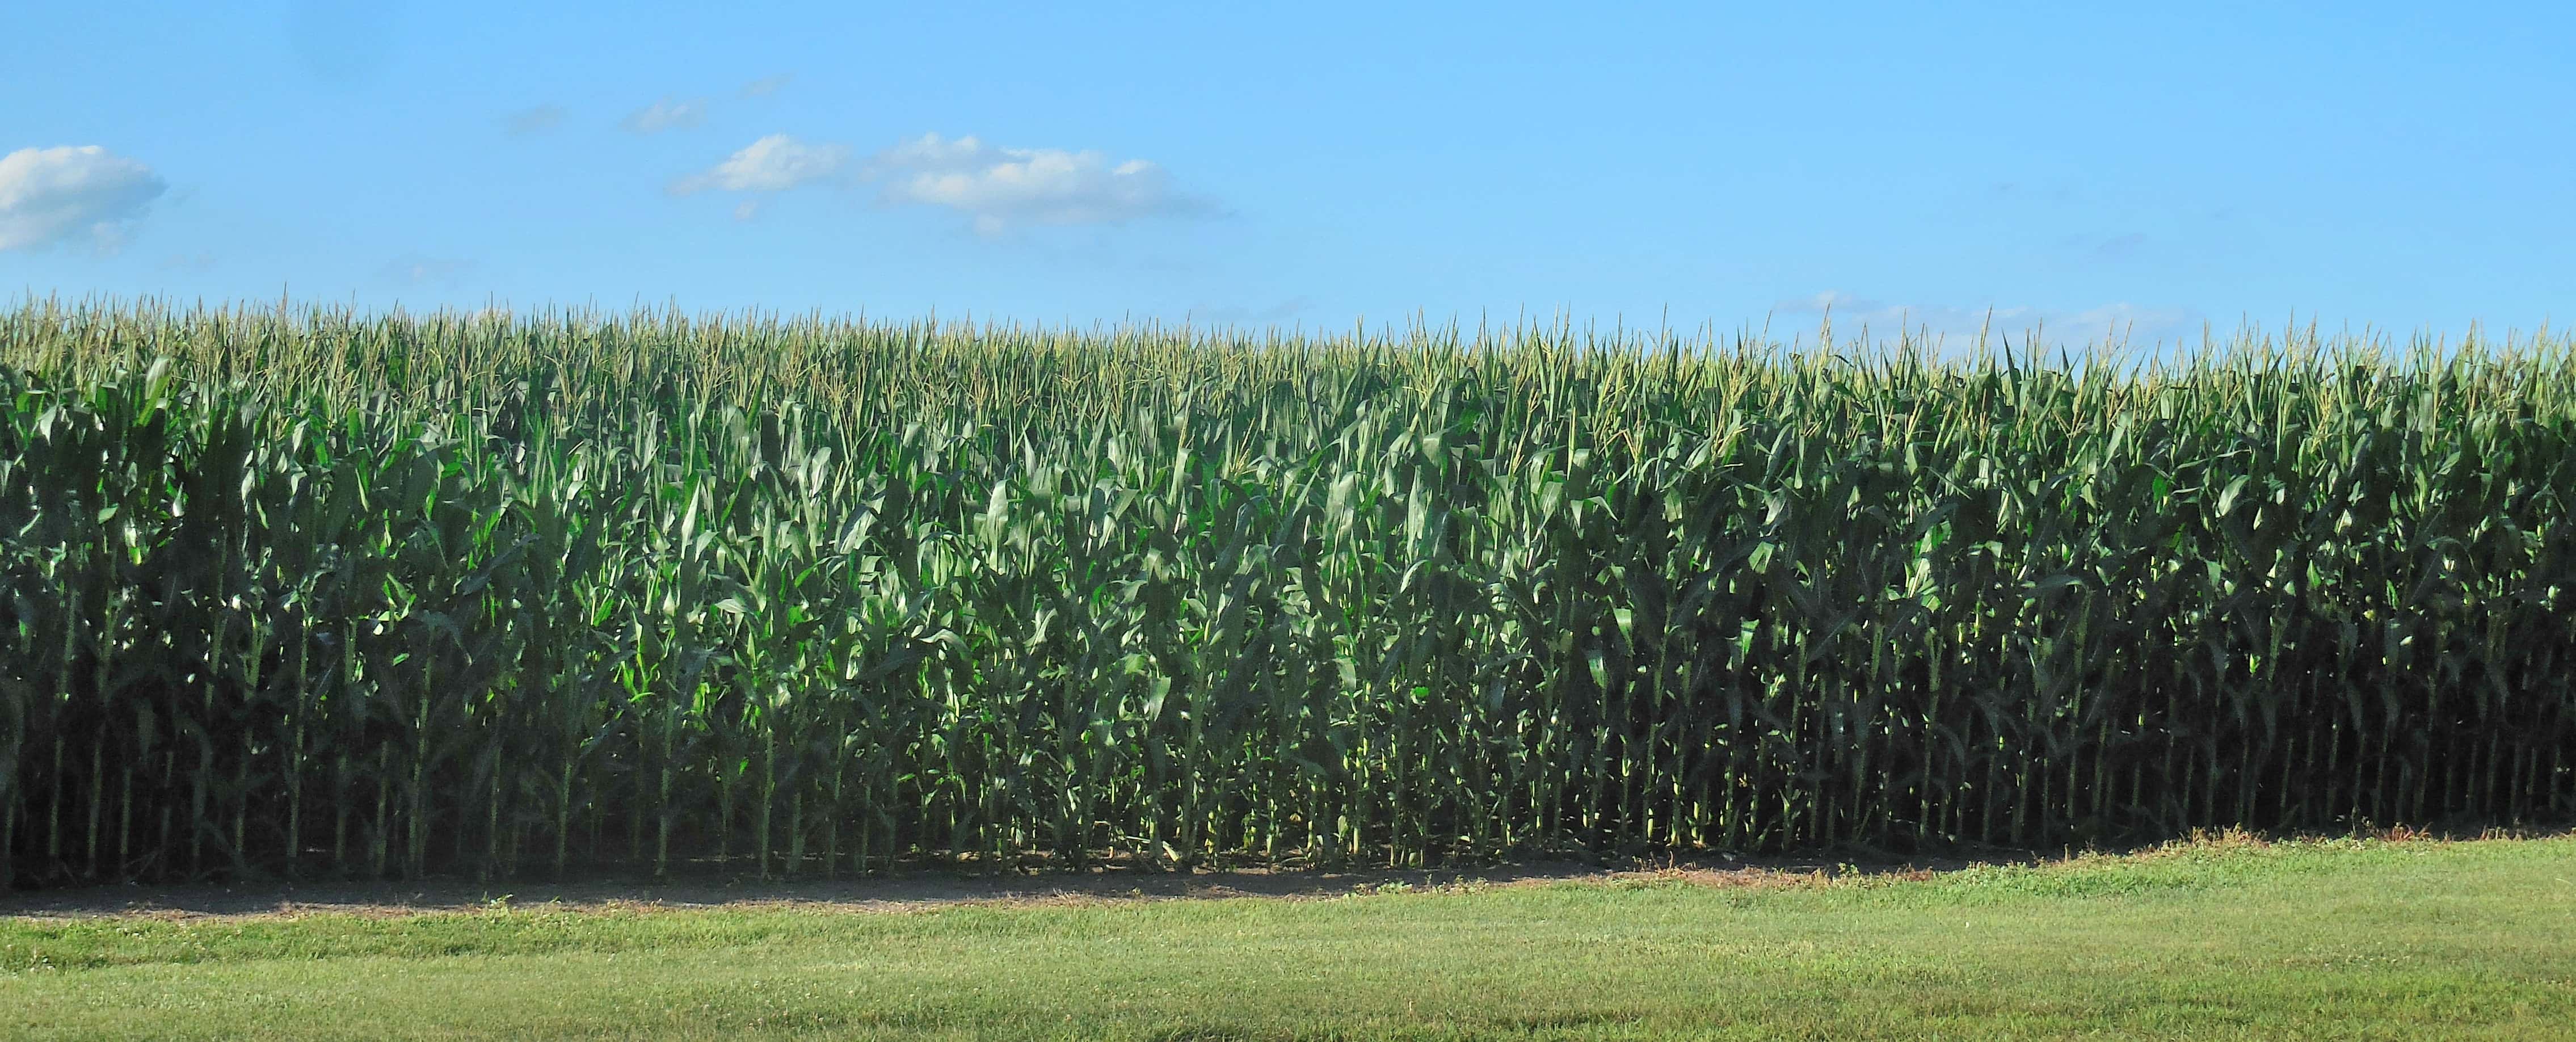 corn-crop-4